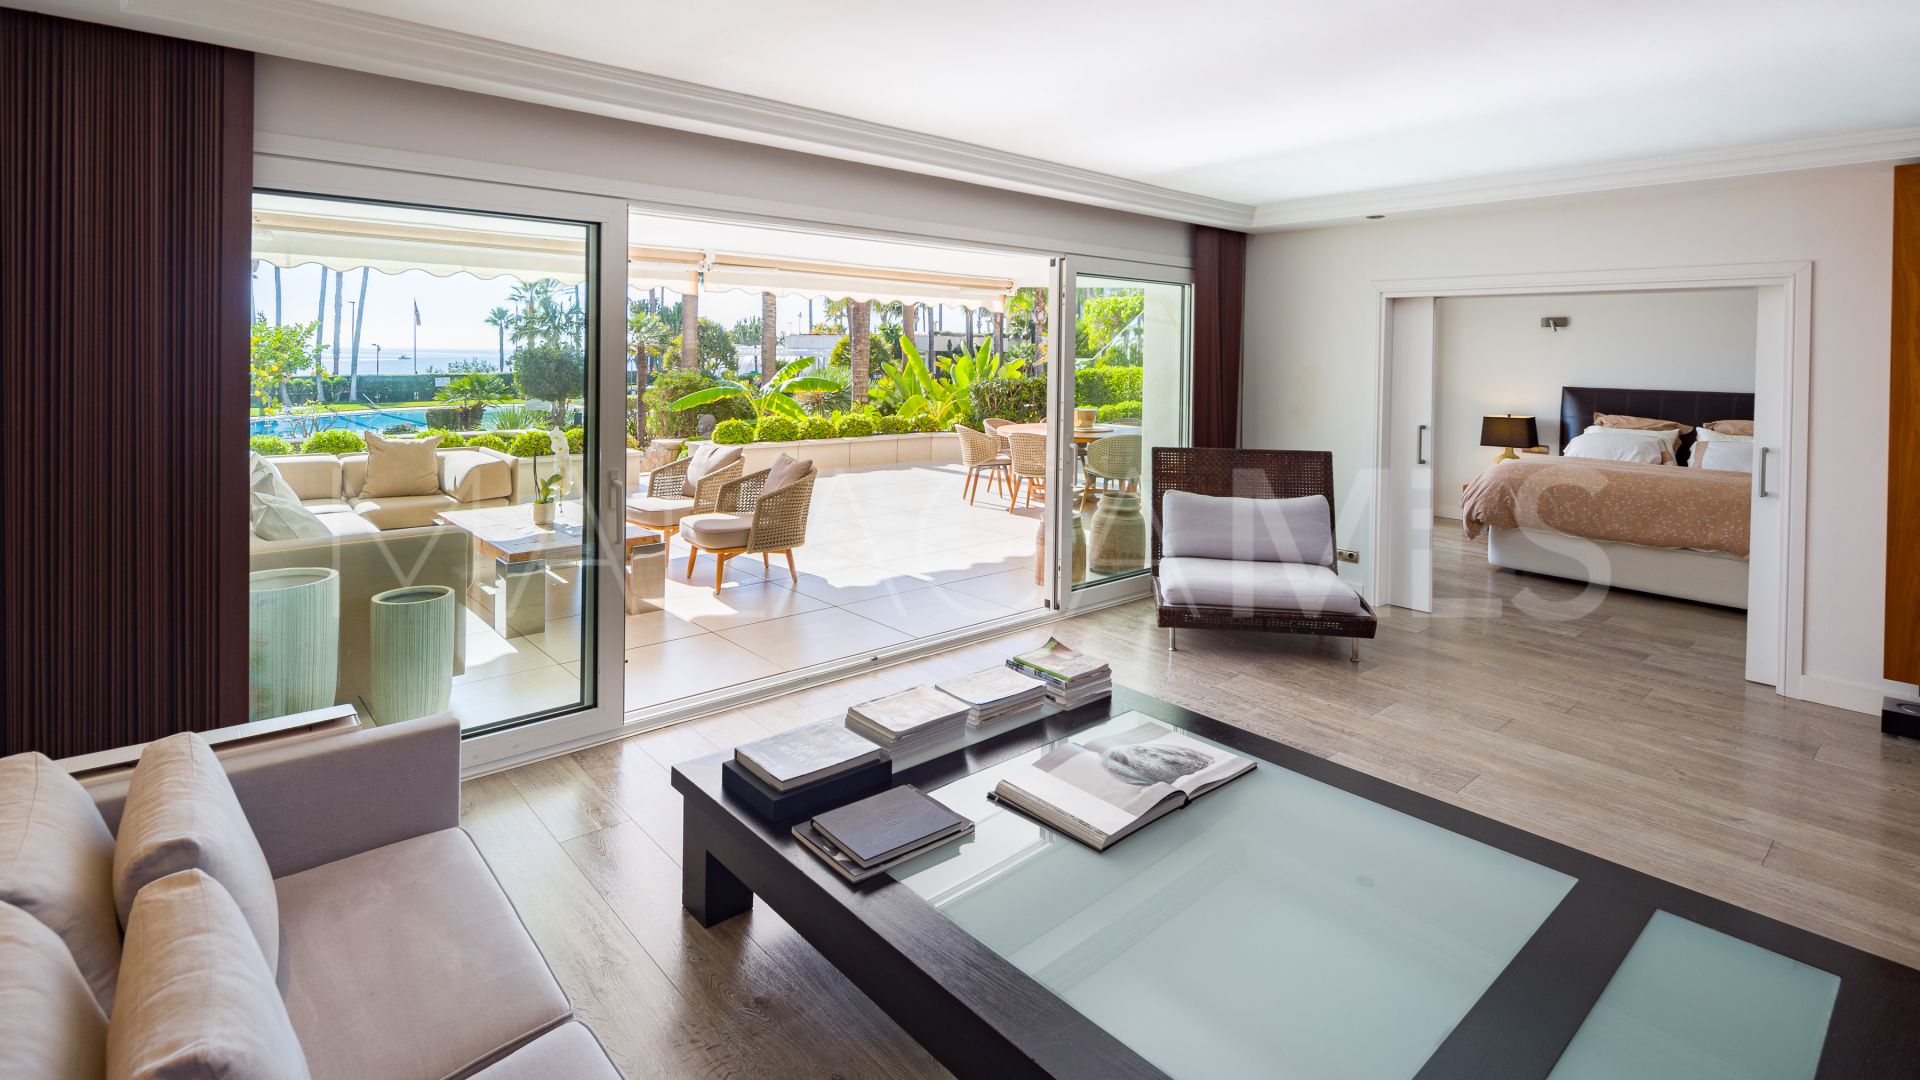 Marbella - Puerto Banus 3 bedrooms ground floor apartment for sale